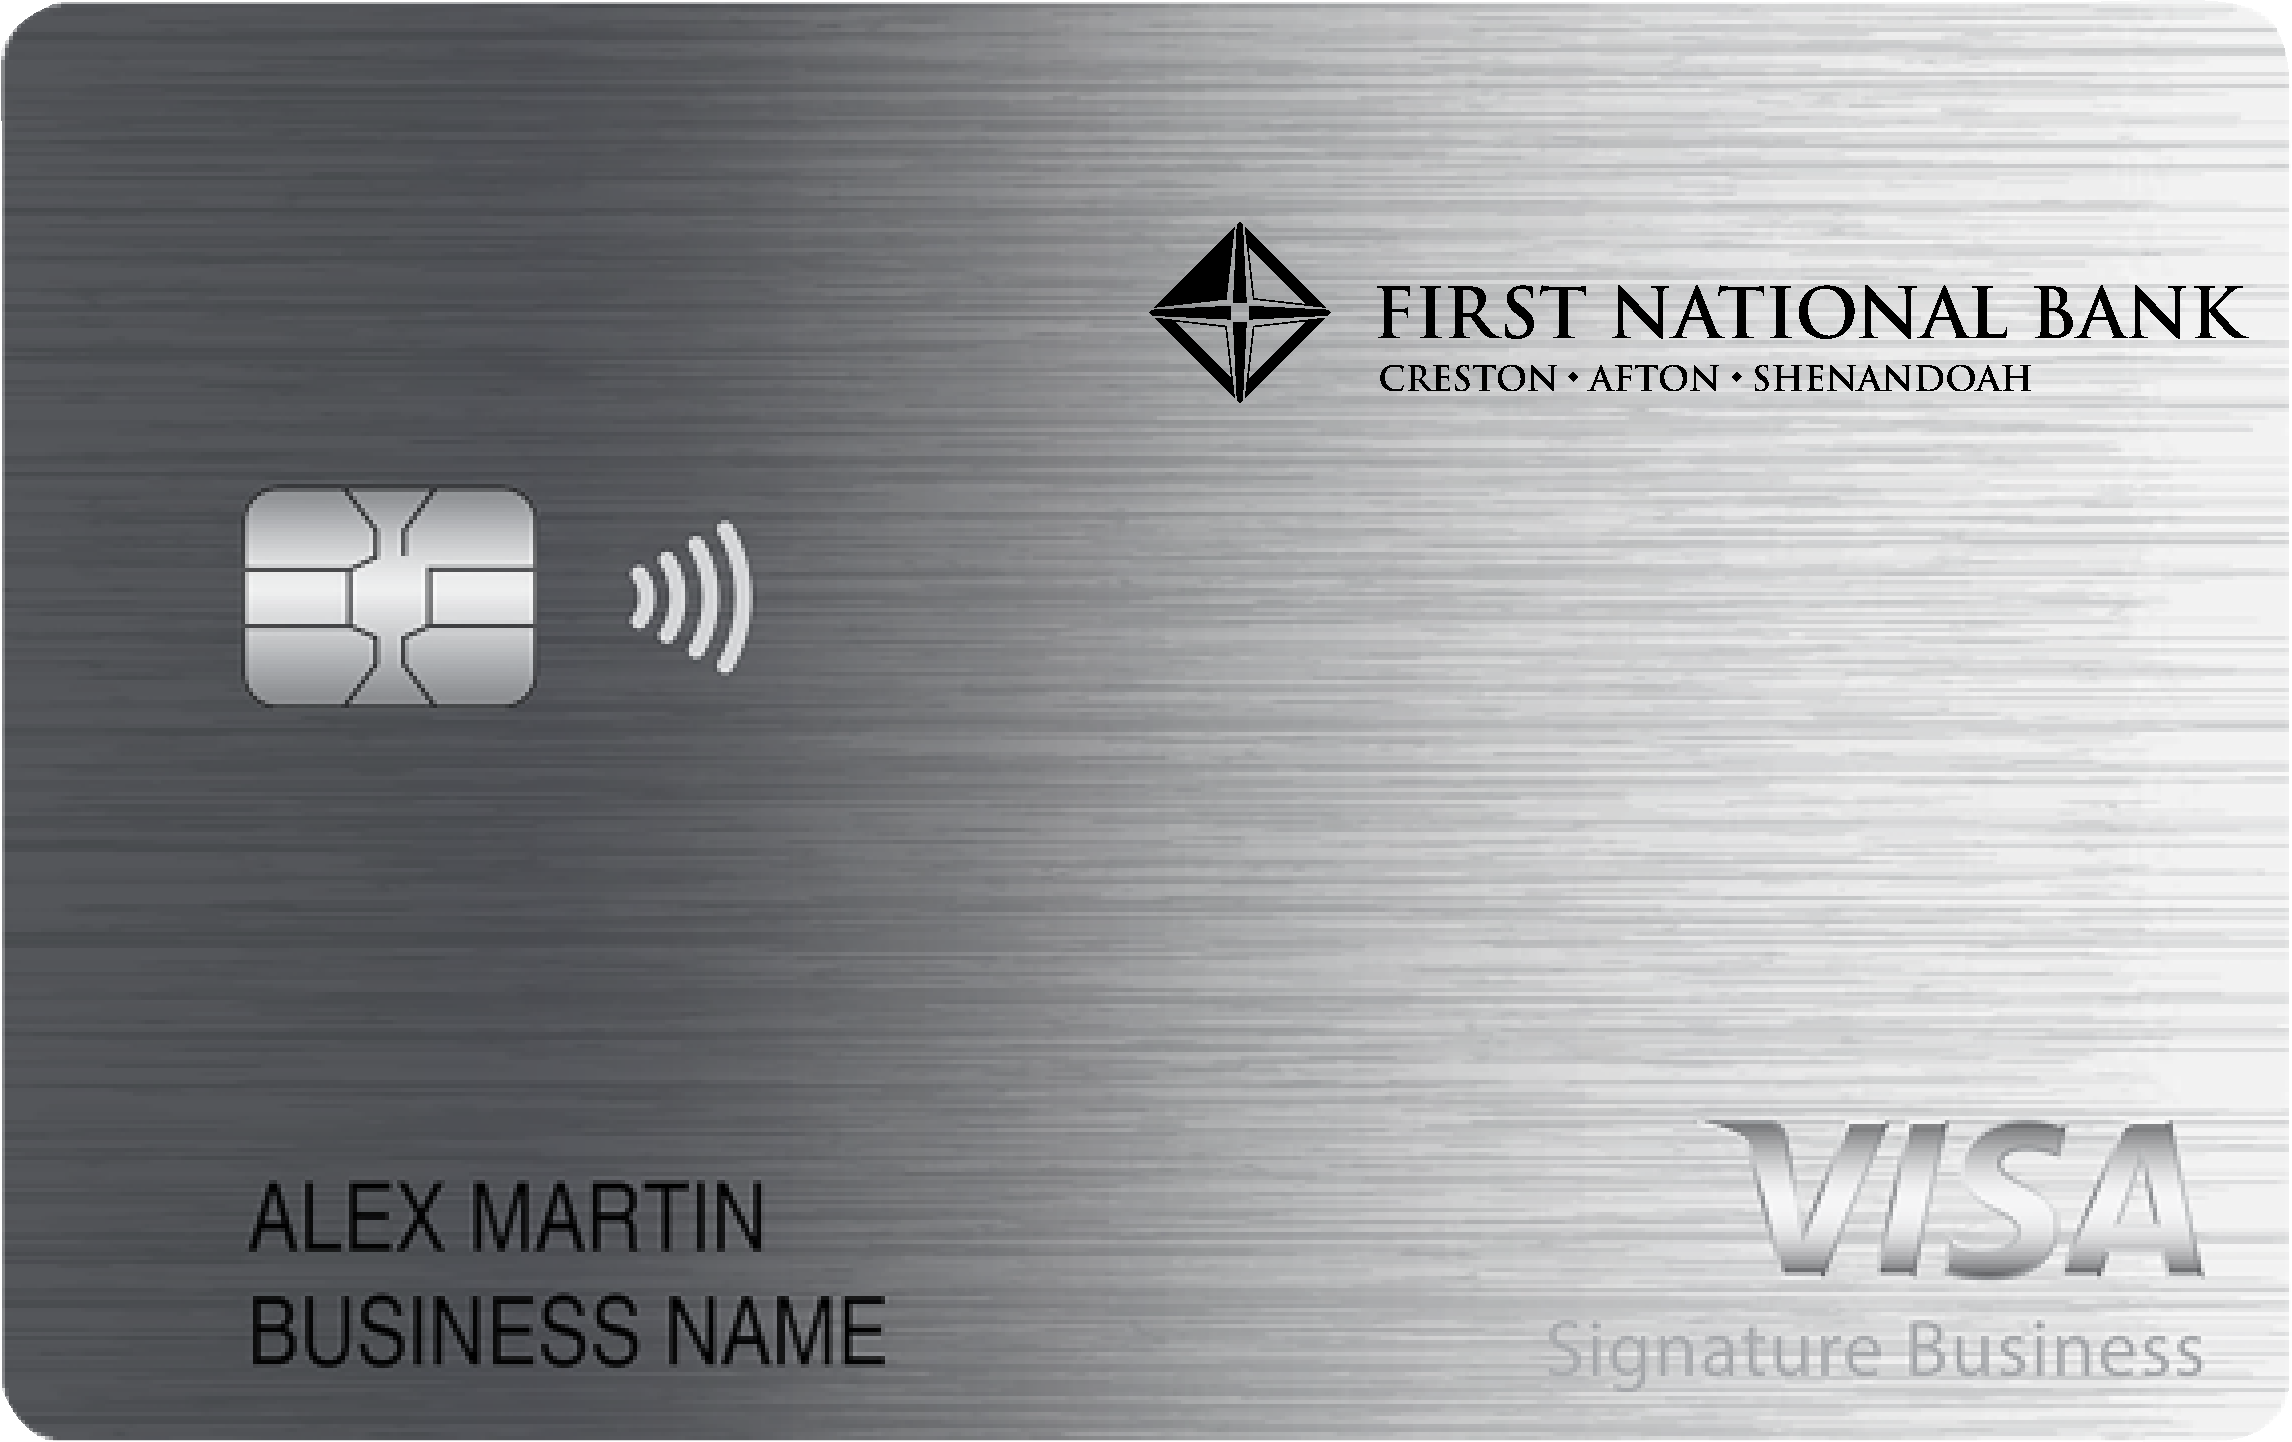 First National Bank in Creston Smart Business Rewards Card